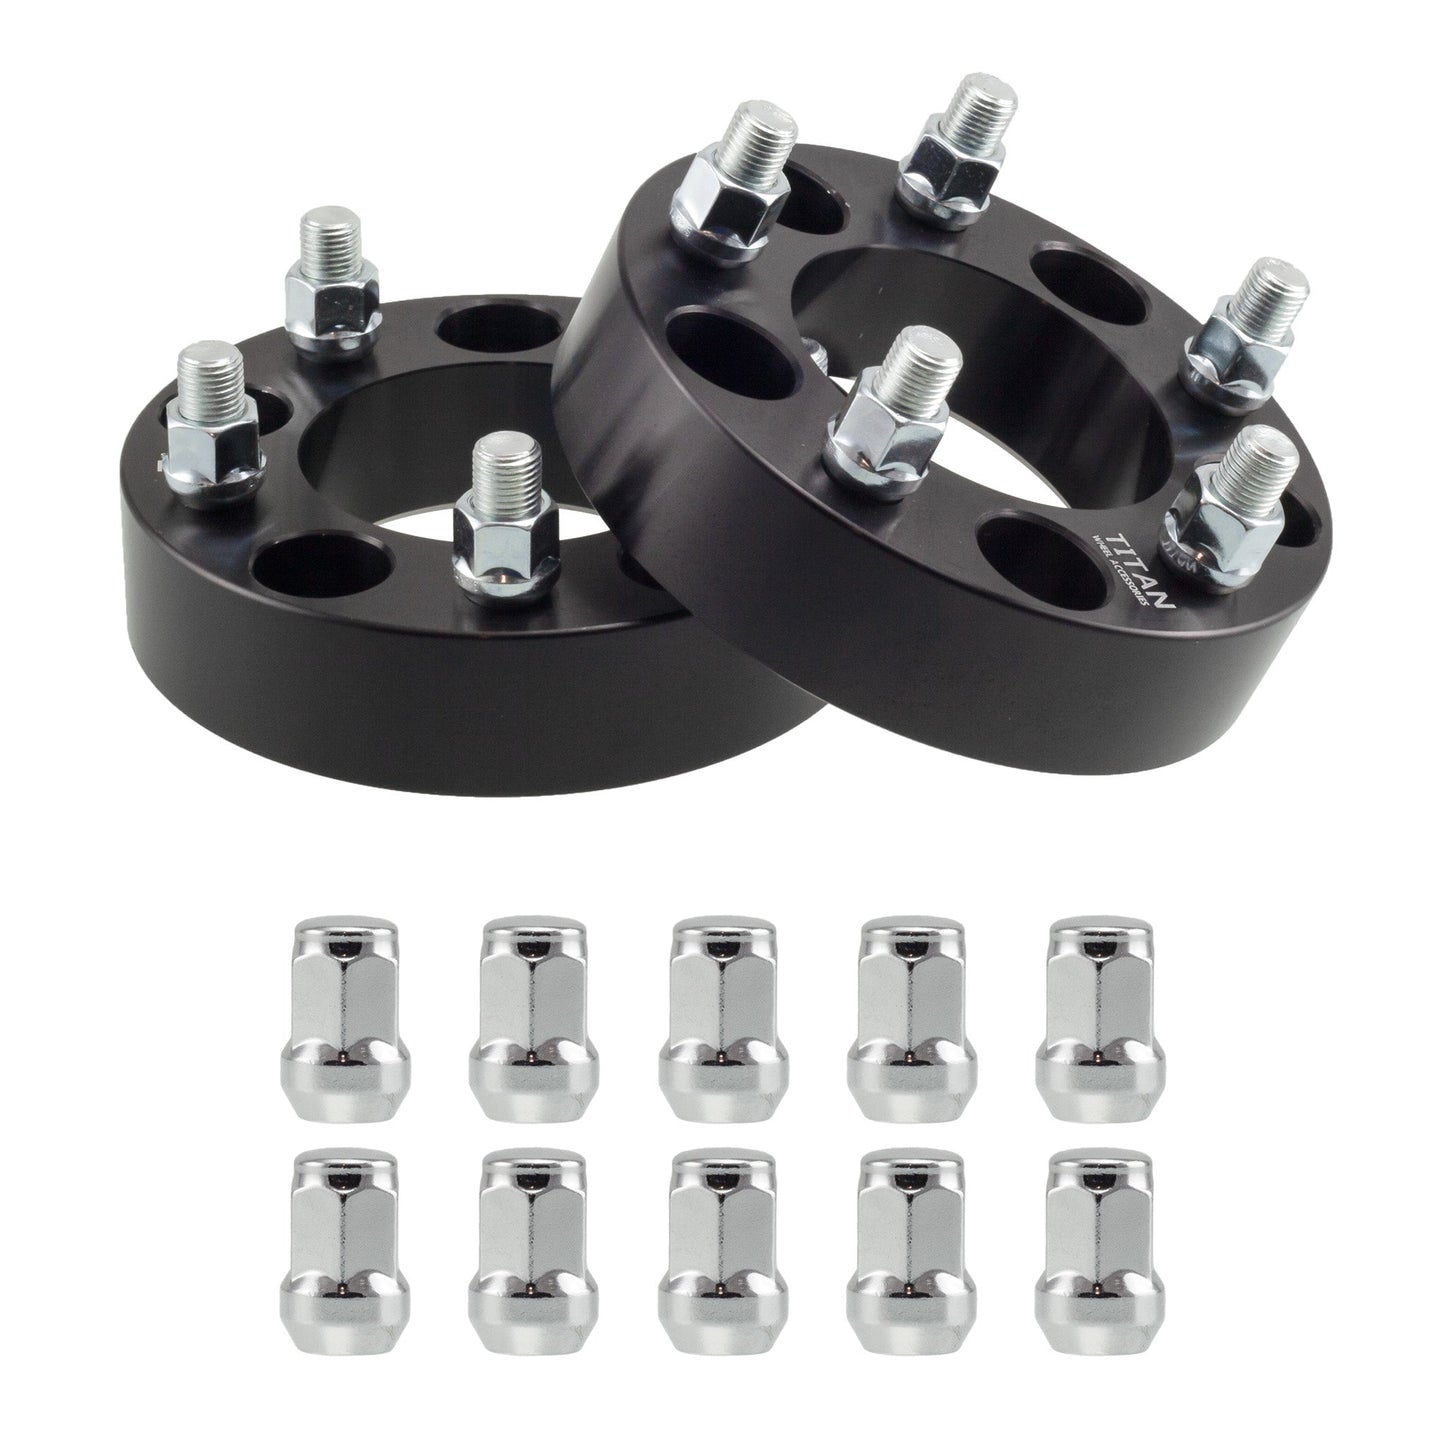 15mm Titan Wheel Spacers for Chrysler Sebring Neon Pontiac Grand Am | 5x100 | 57.1 Hubcentric |12x1.5 Studs | Titan Wheel Accessories